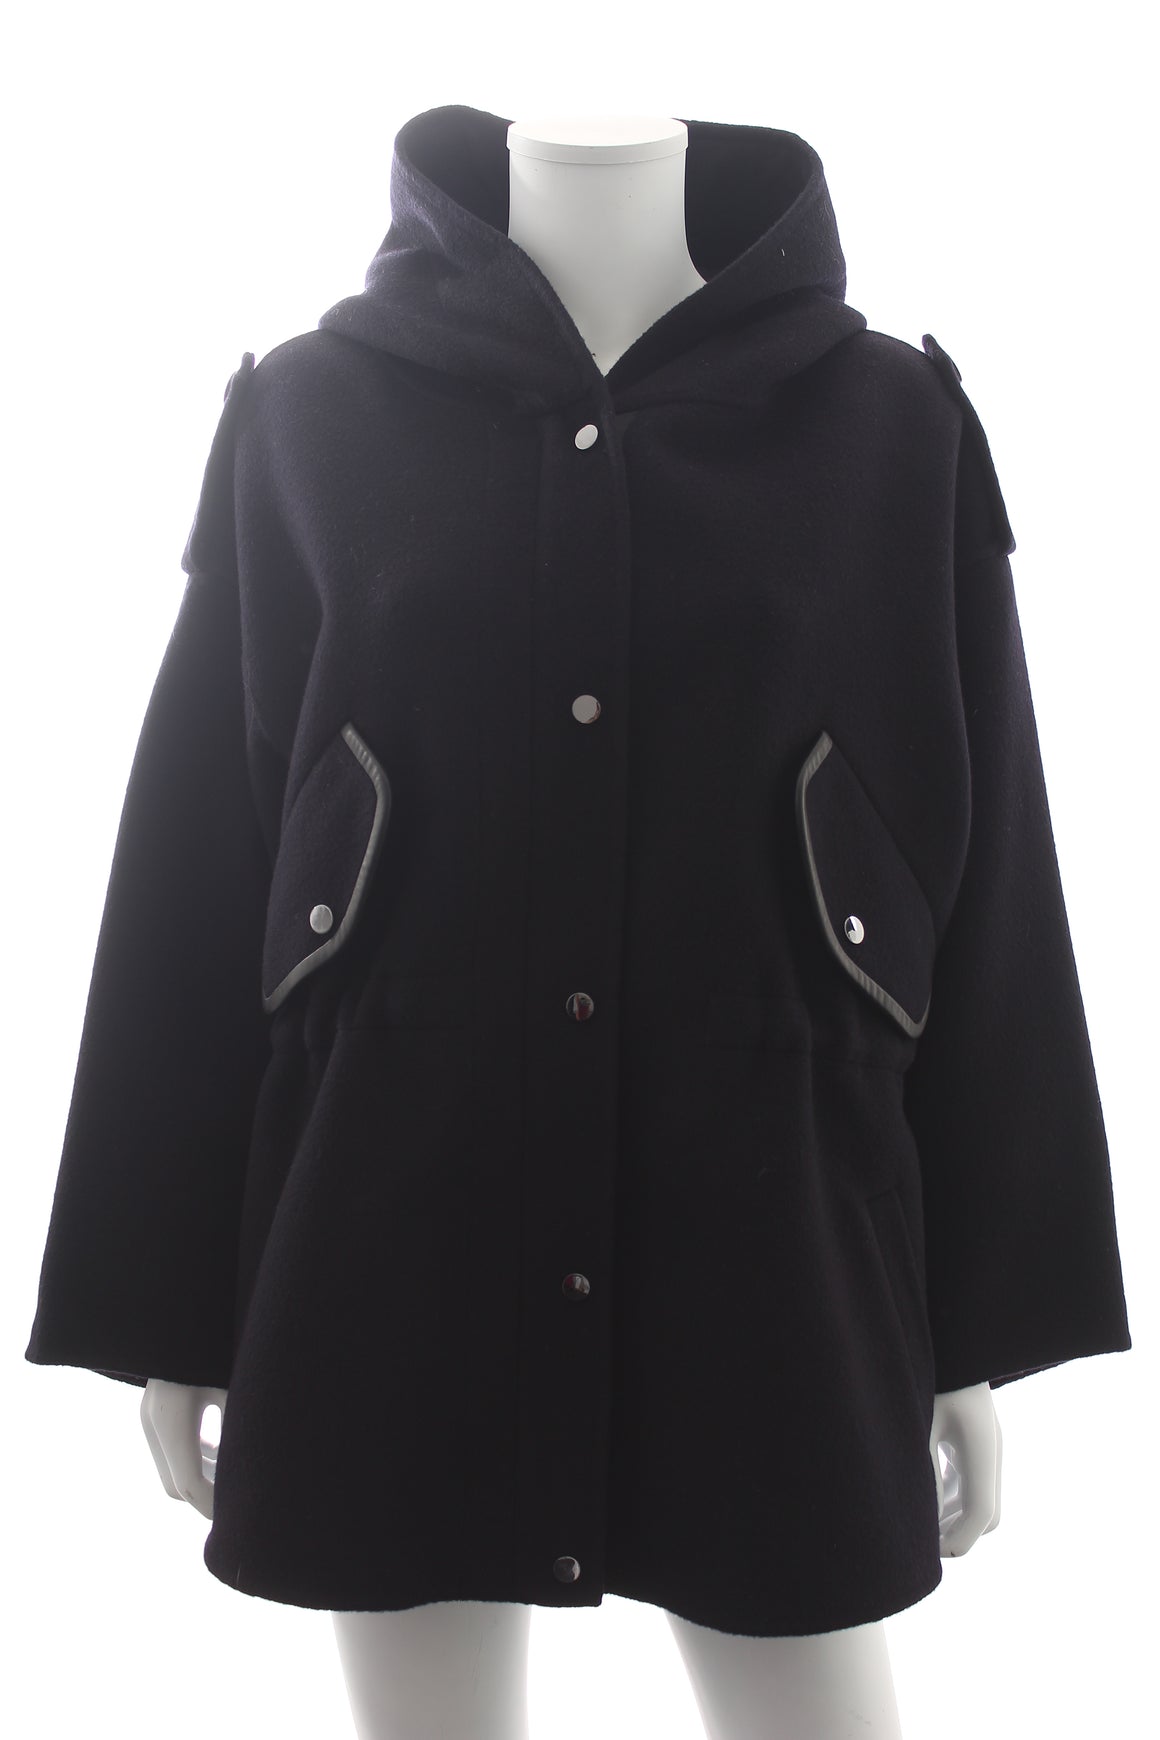 Maje Leather-Trimmed Wool-Blend Oversized Coat